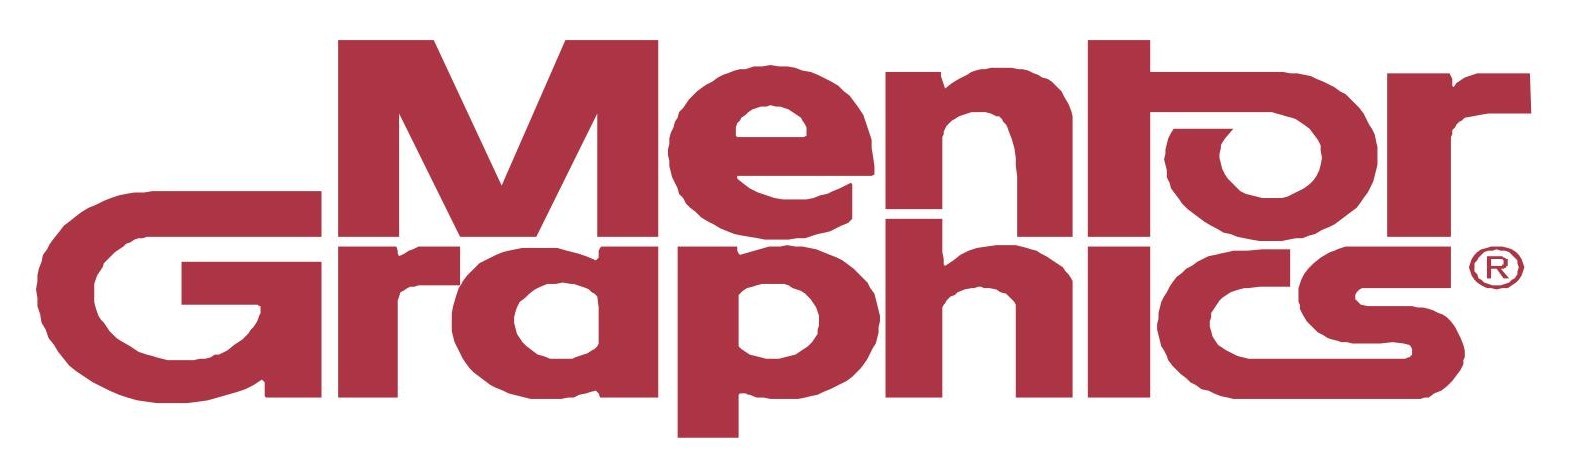 mento graphics logo